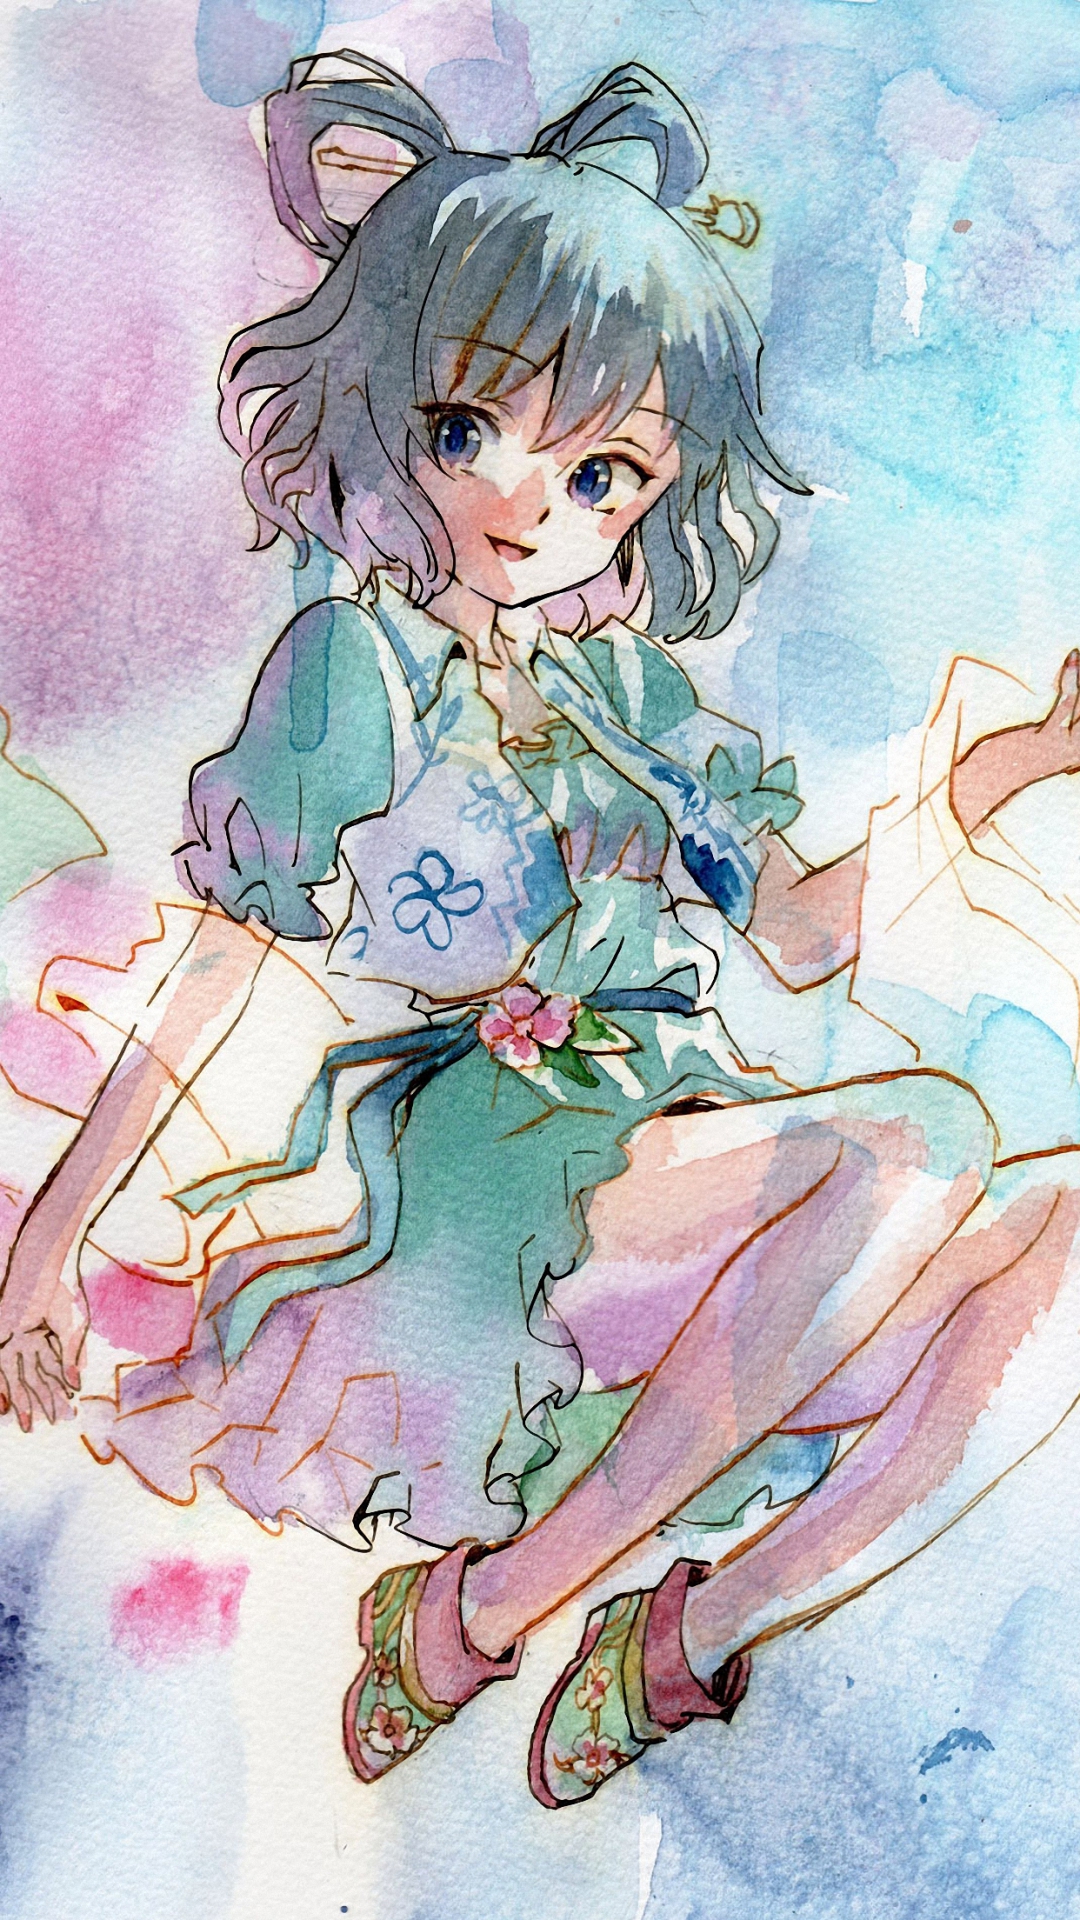 47 Cute Anime Girl Iphone Wallpaper On Wallpapersafari